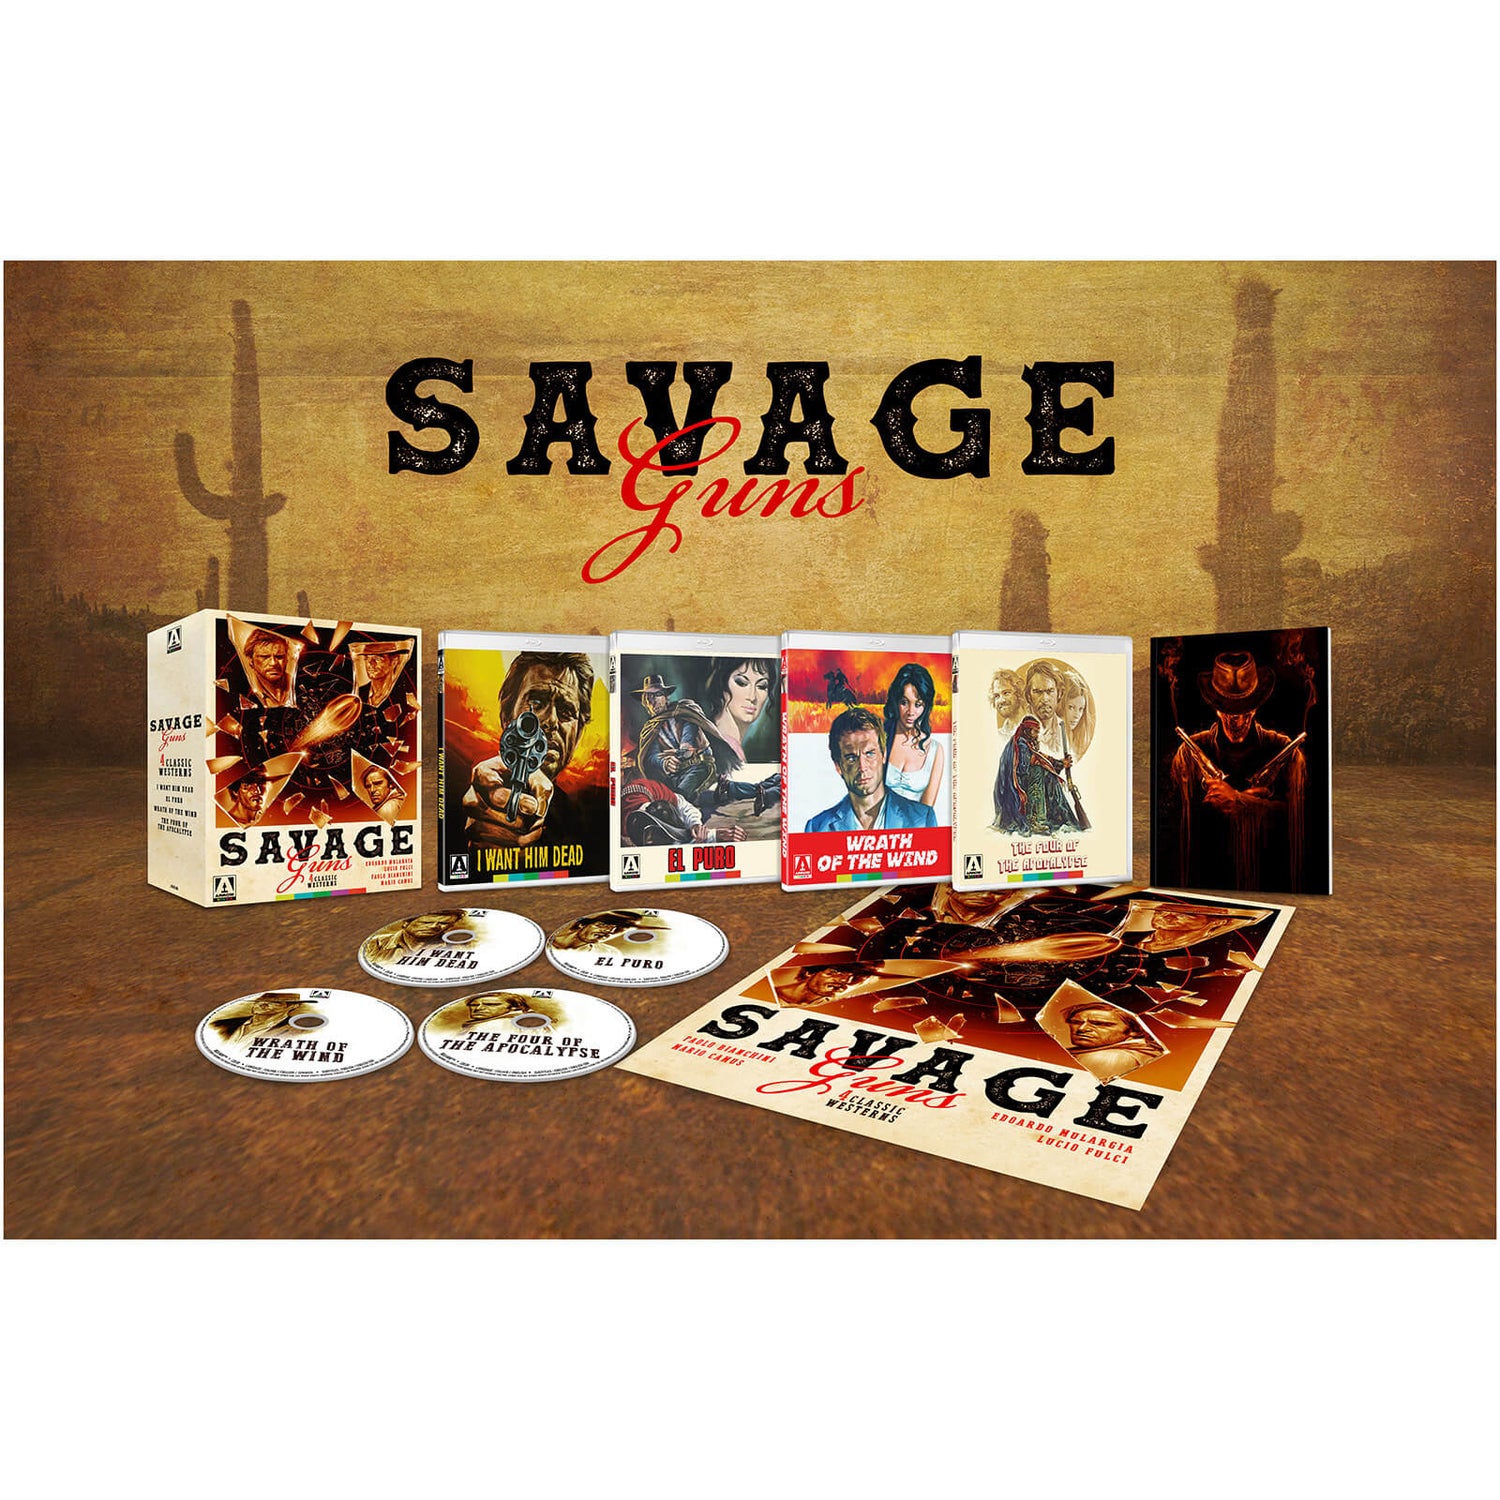 Savage Guns: Four Classic Westerns Vol 3 | Limited Edition Blu-ray